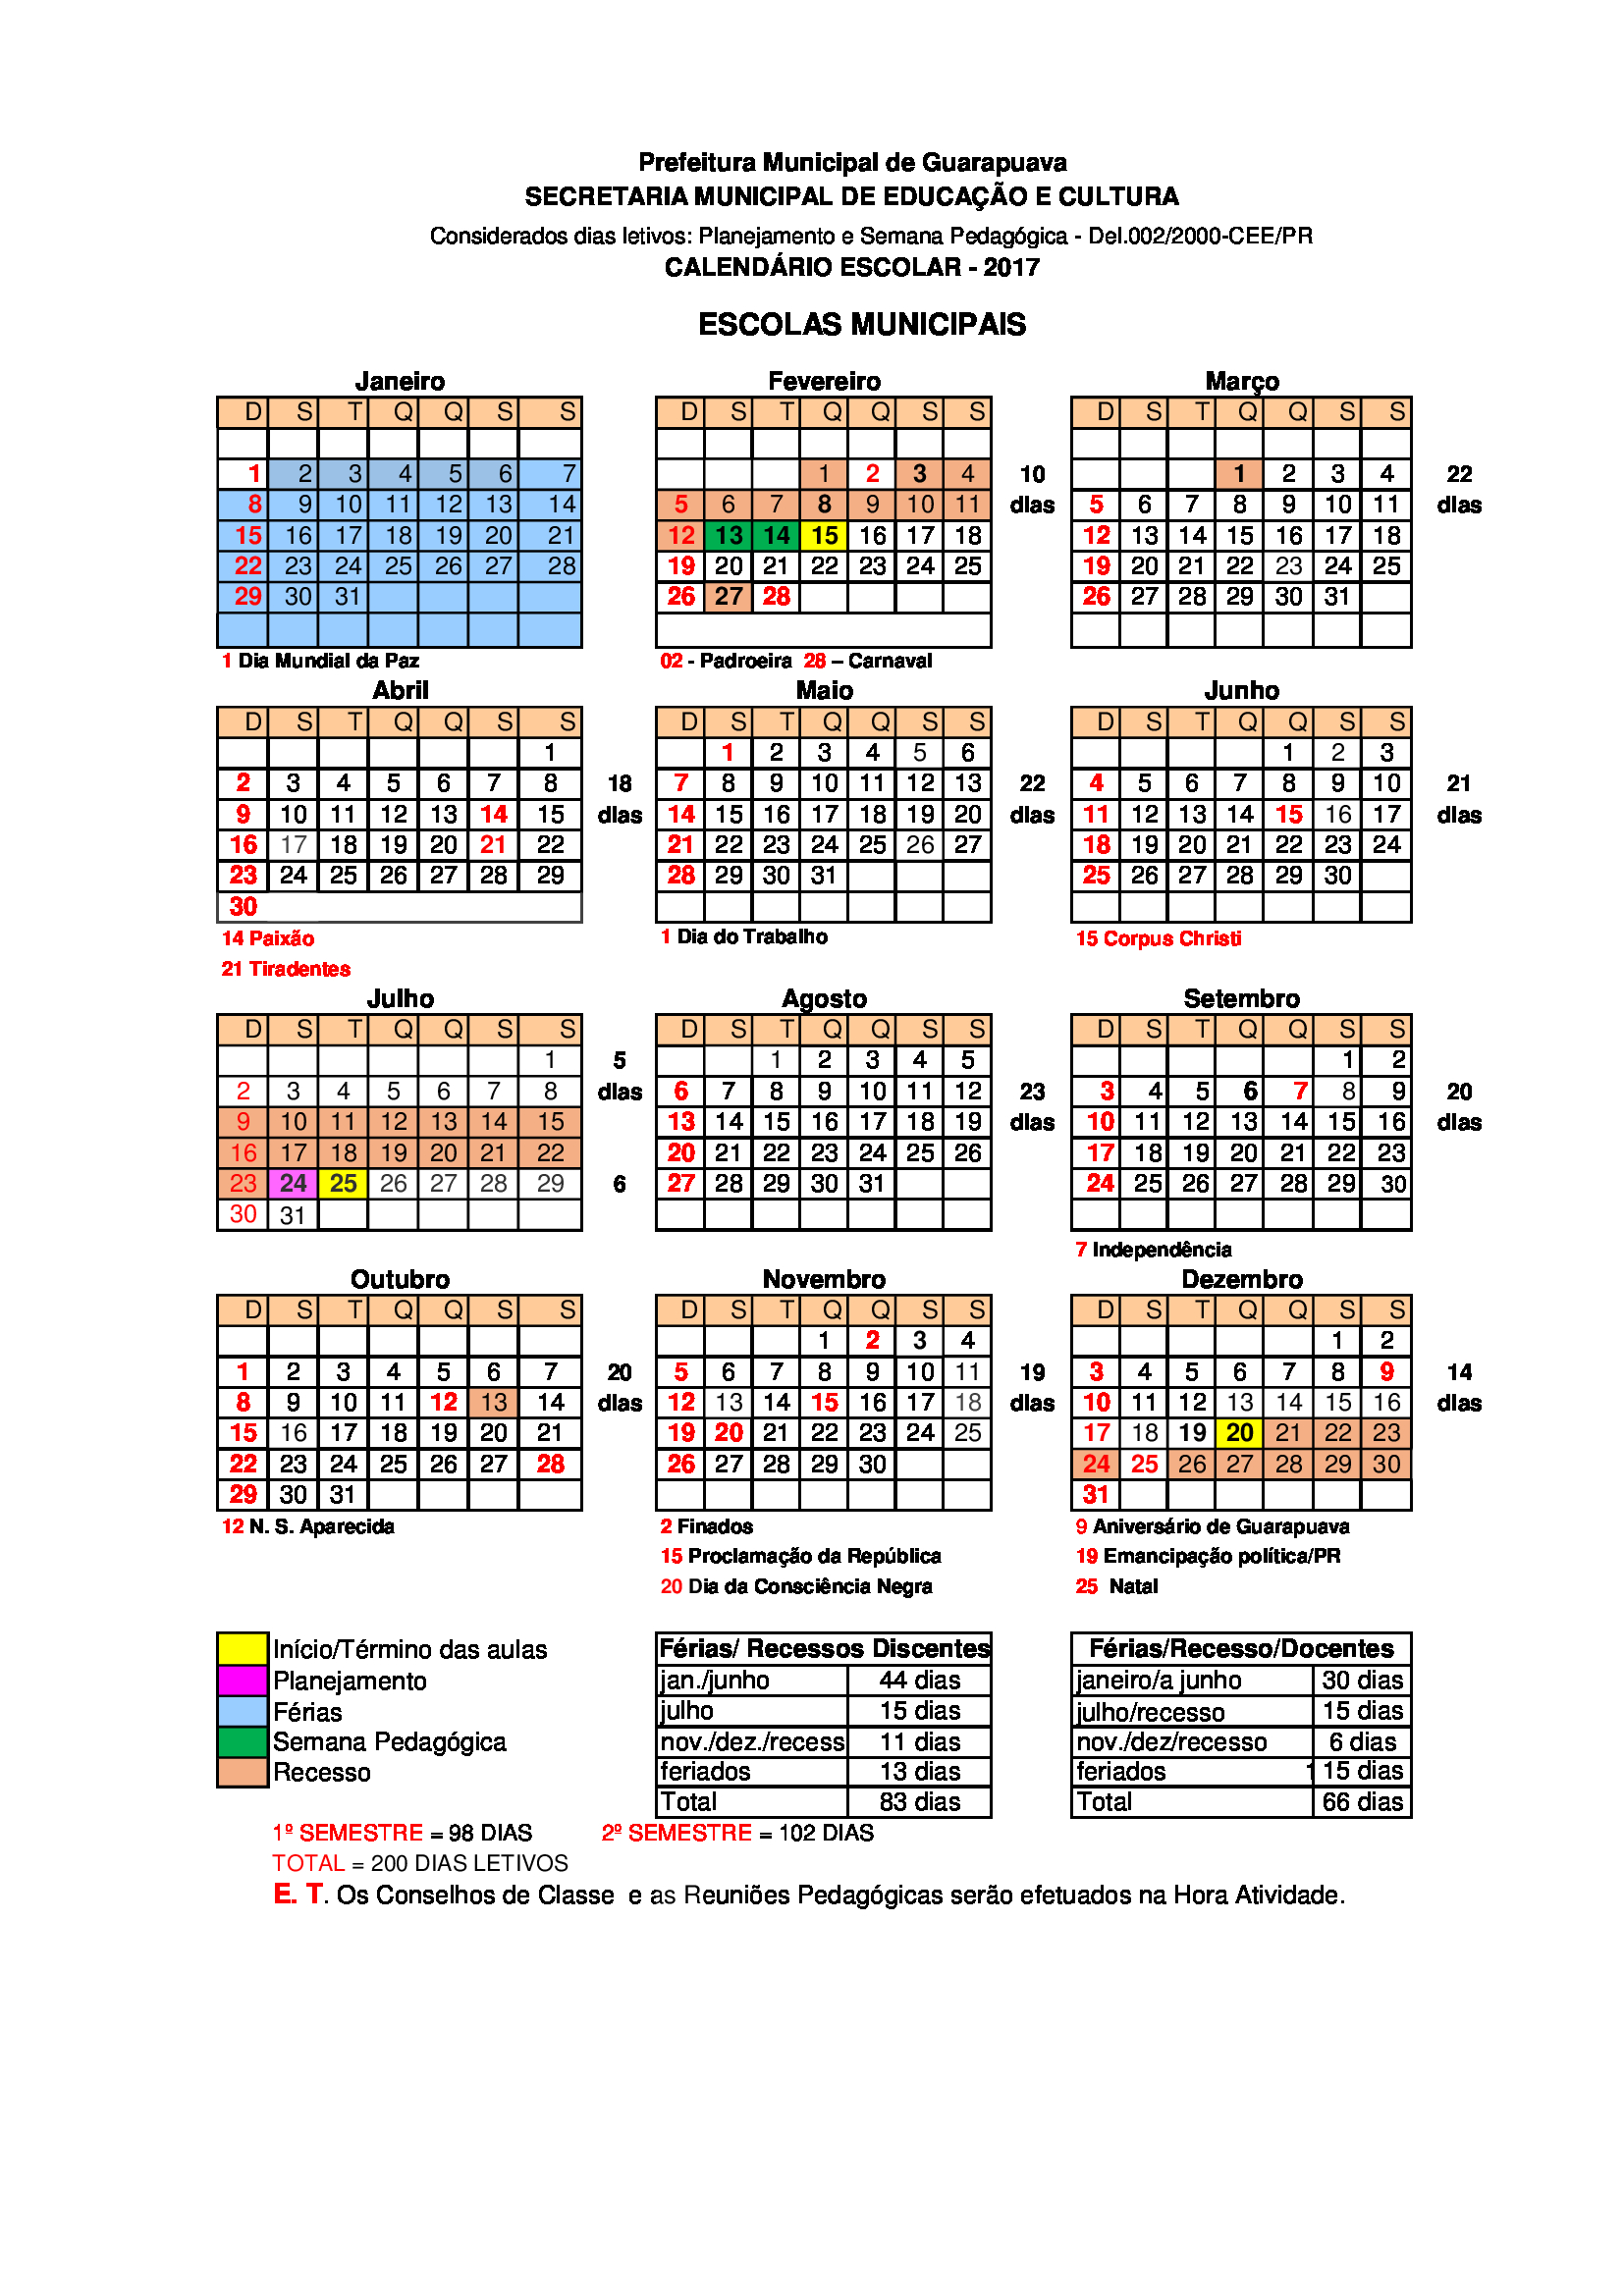 Calendario-2017-Escolas-Municipais